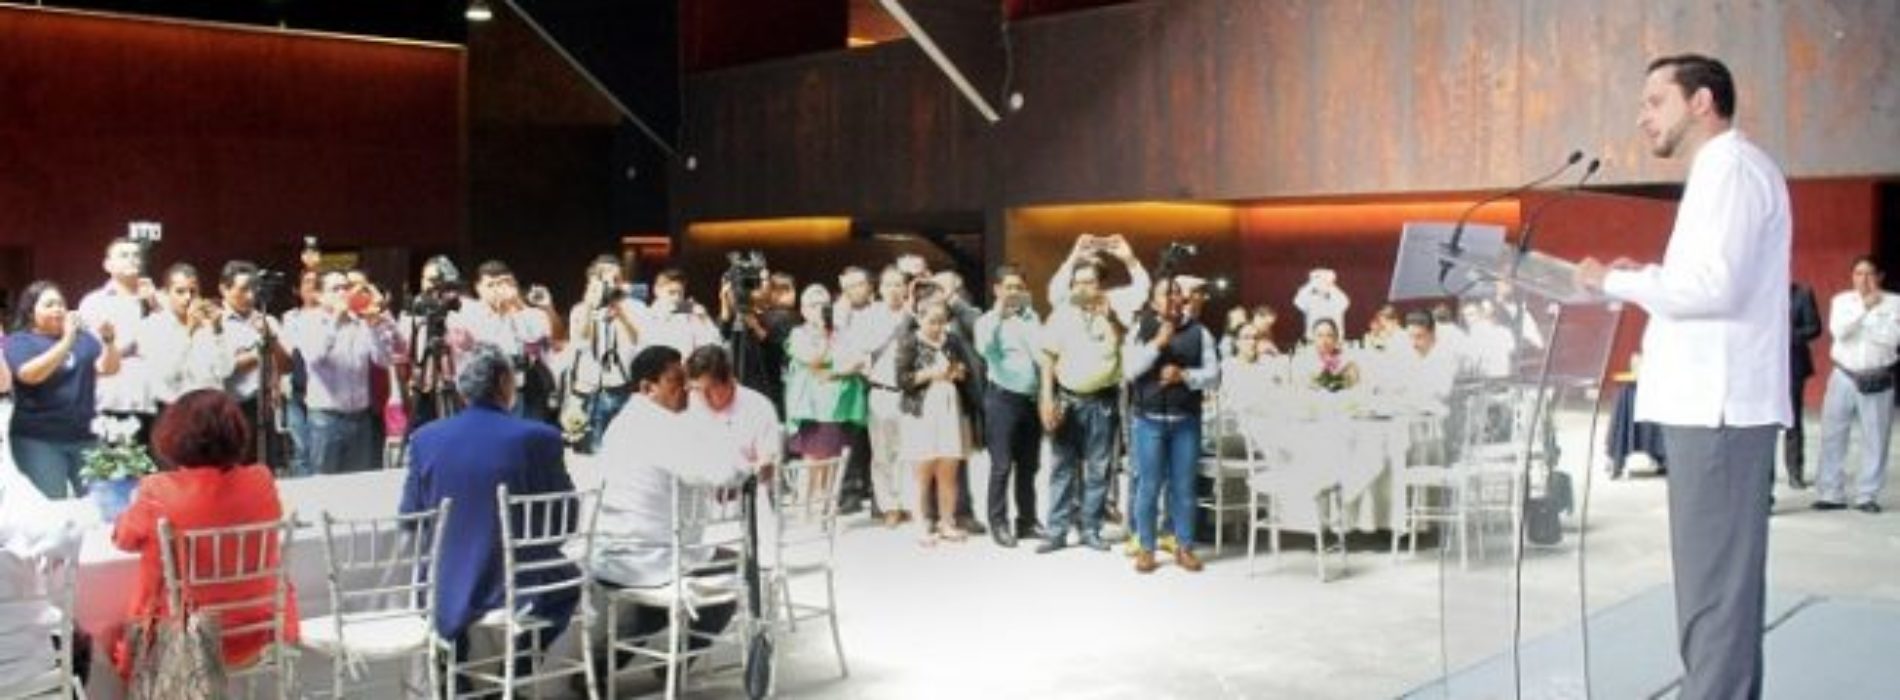 Reafirma Gobierno de Oaxaca pleno respeto a la libertad de
expresión